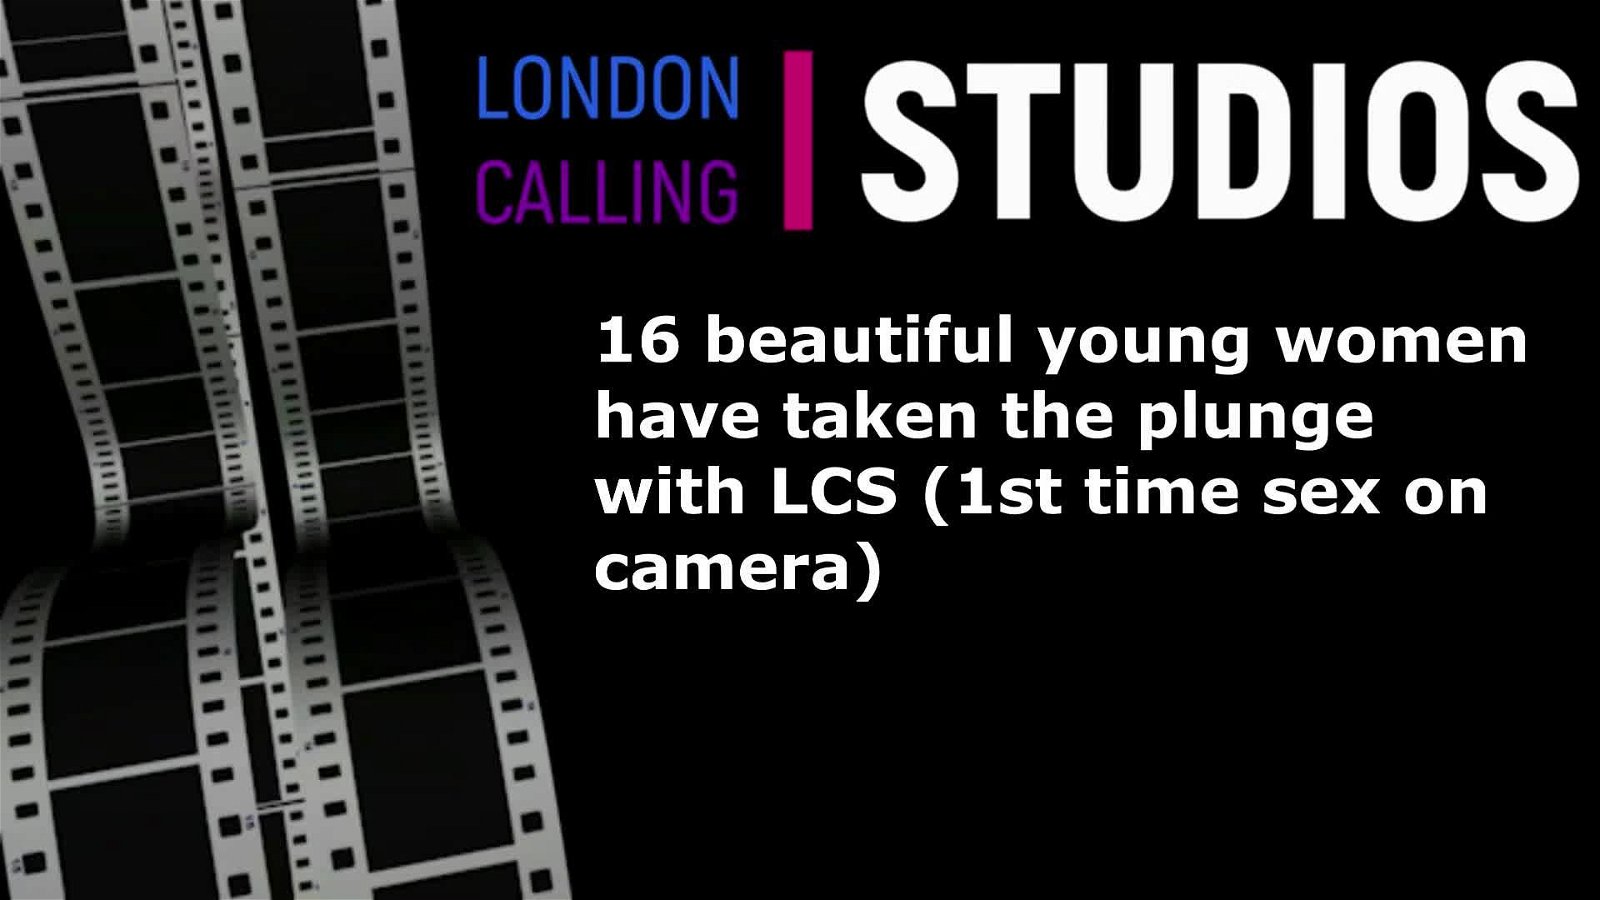 Video post by LondonCallingStudios